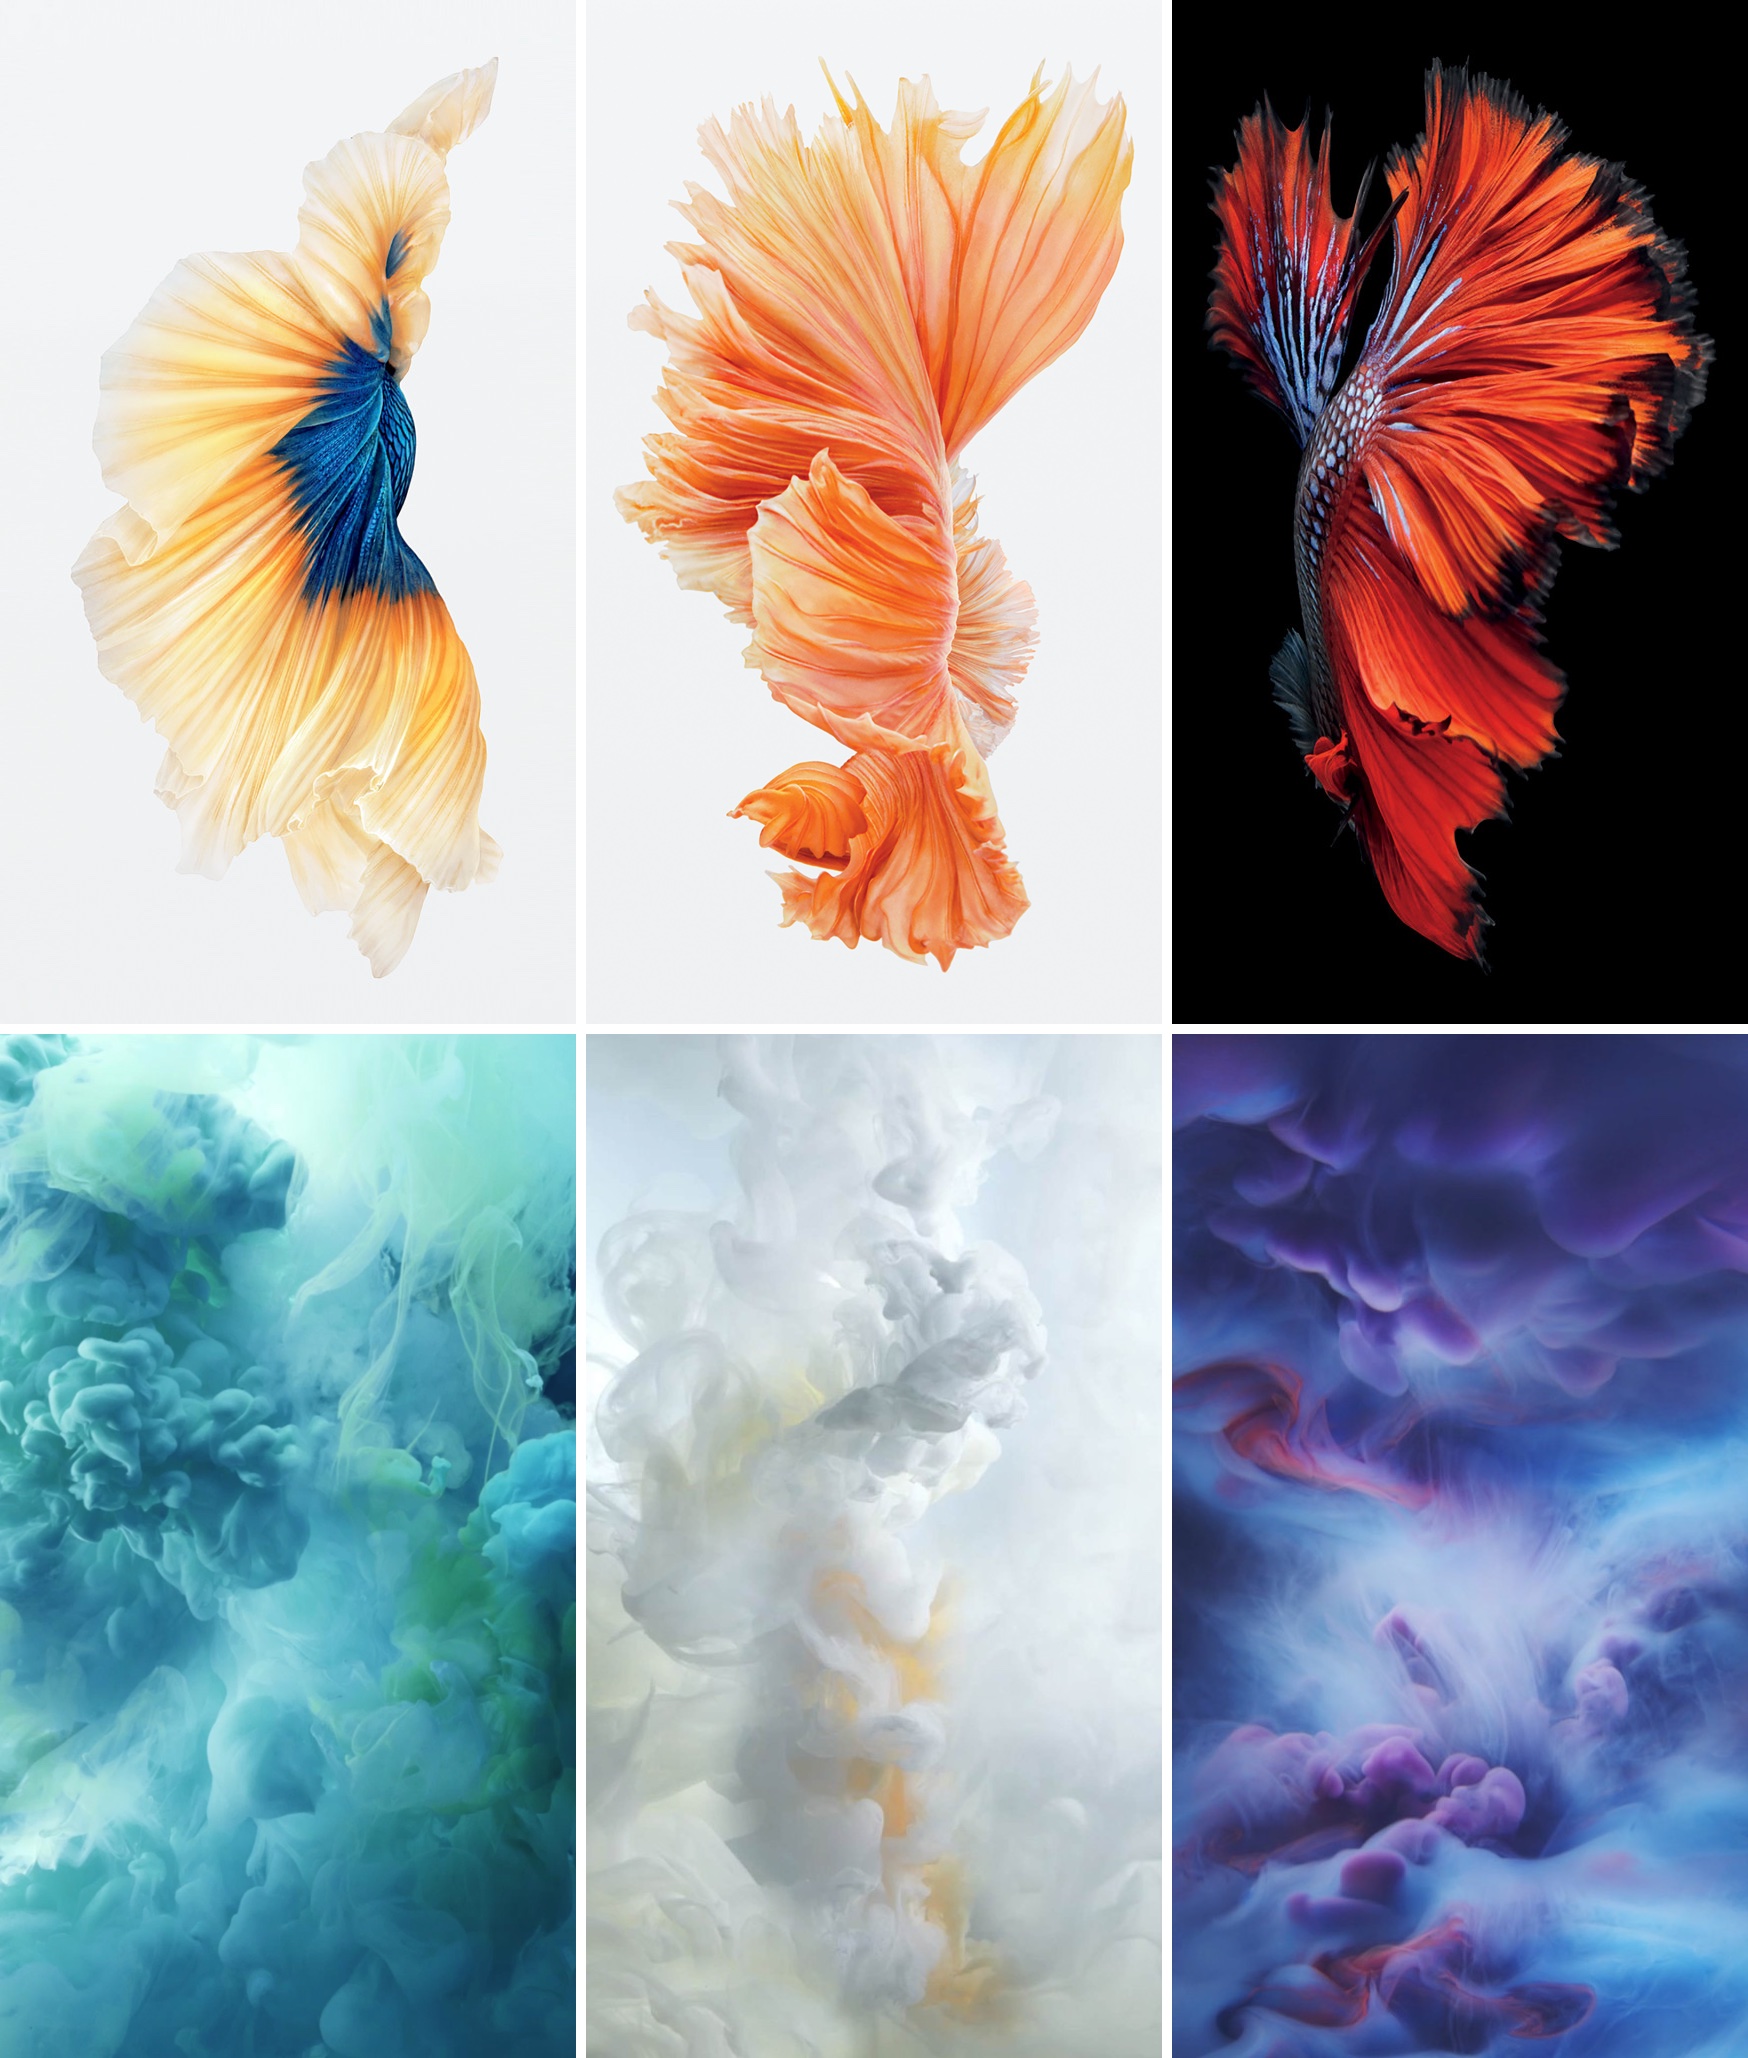 Wallpapers dos novos iPhones